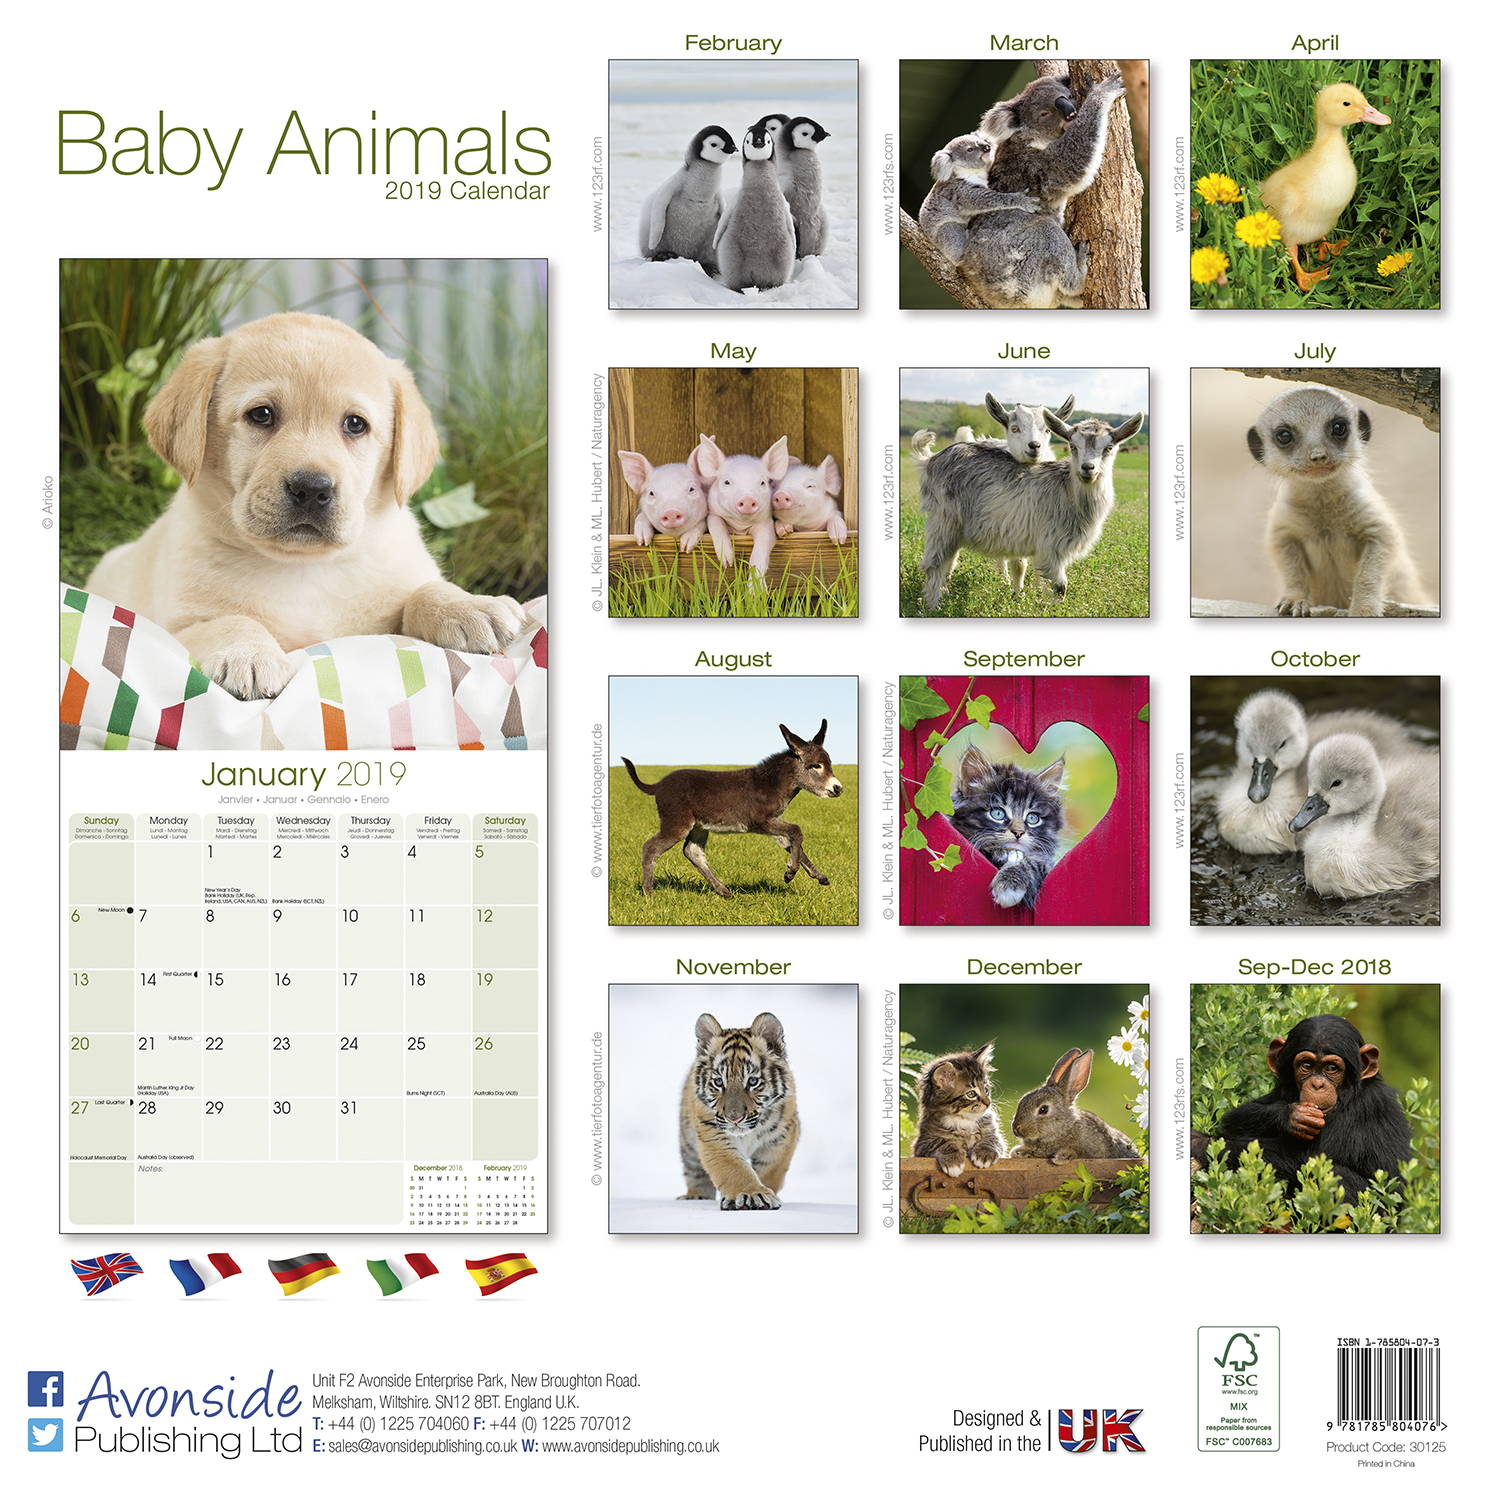 Baby Animals Calendar 2019 Pet Prints Inc.